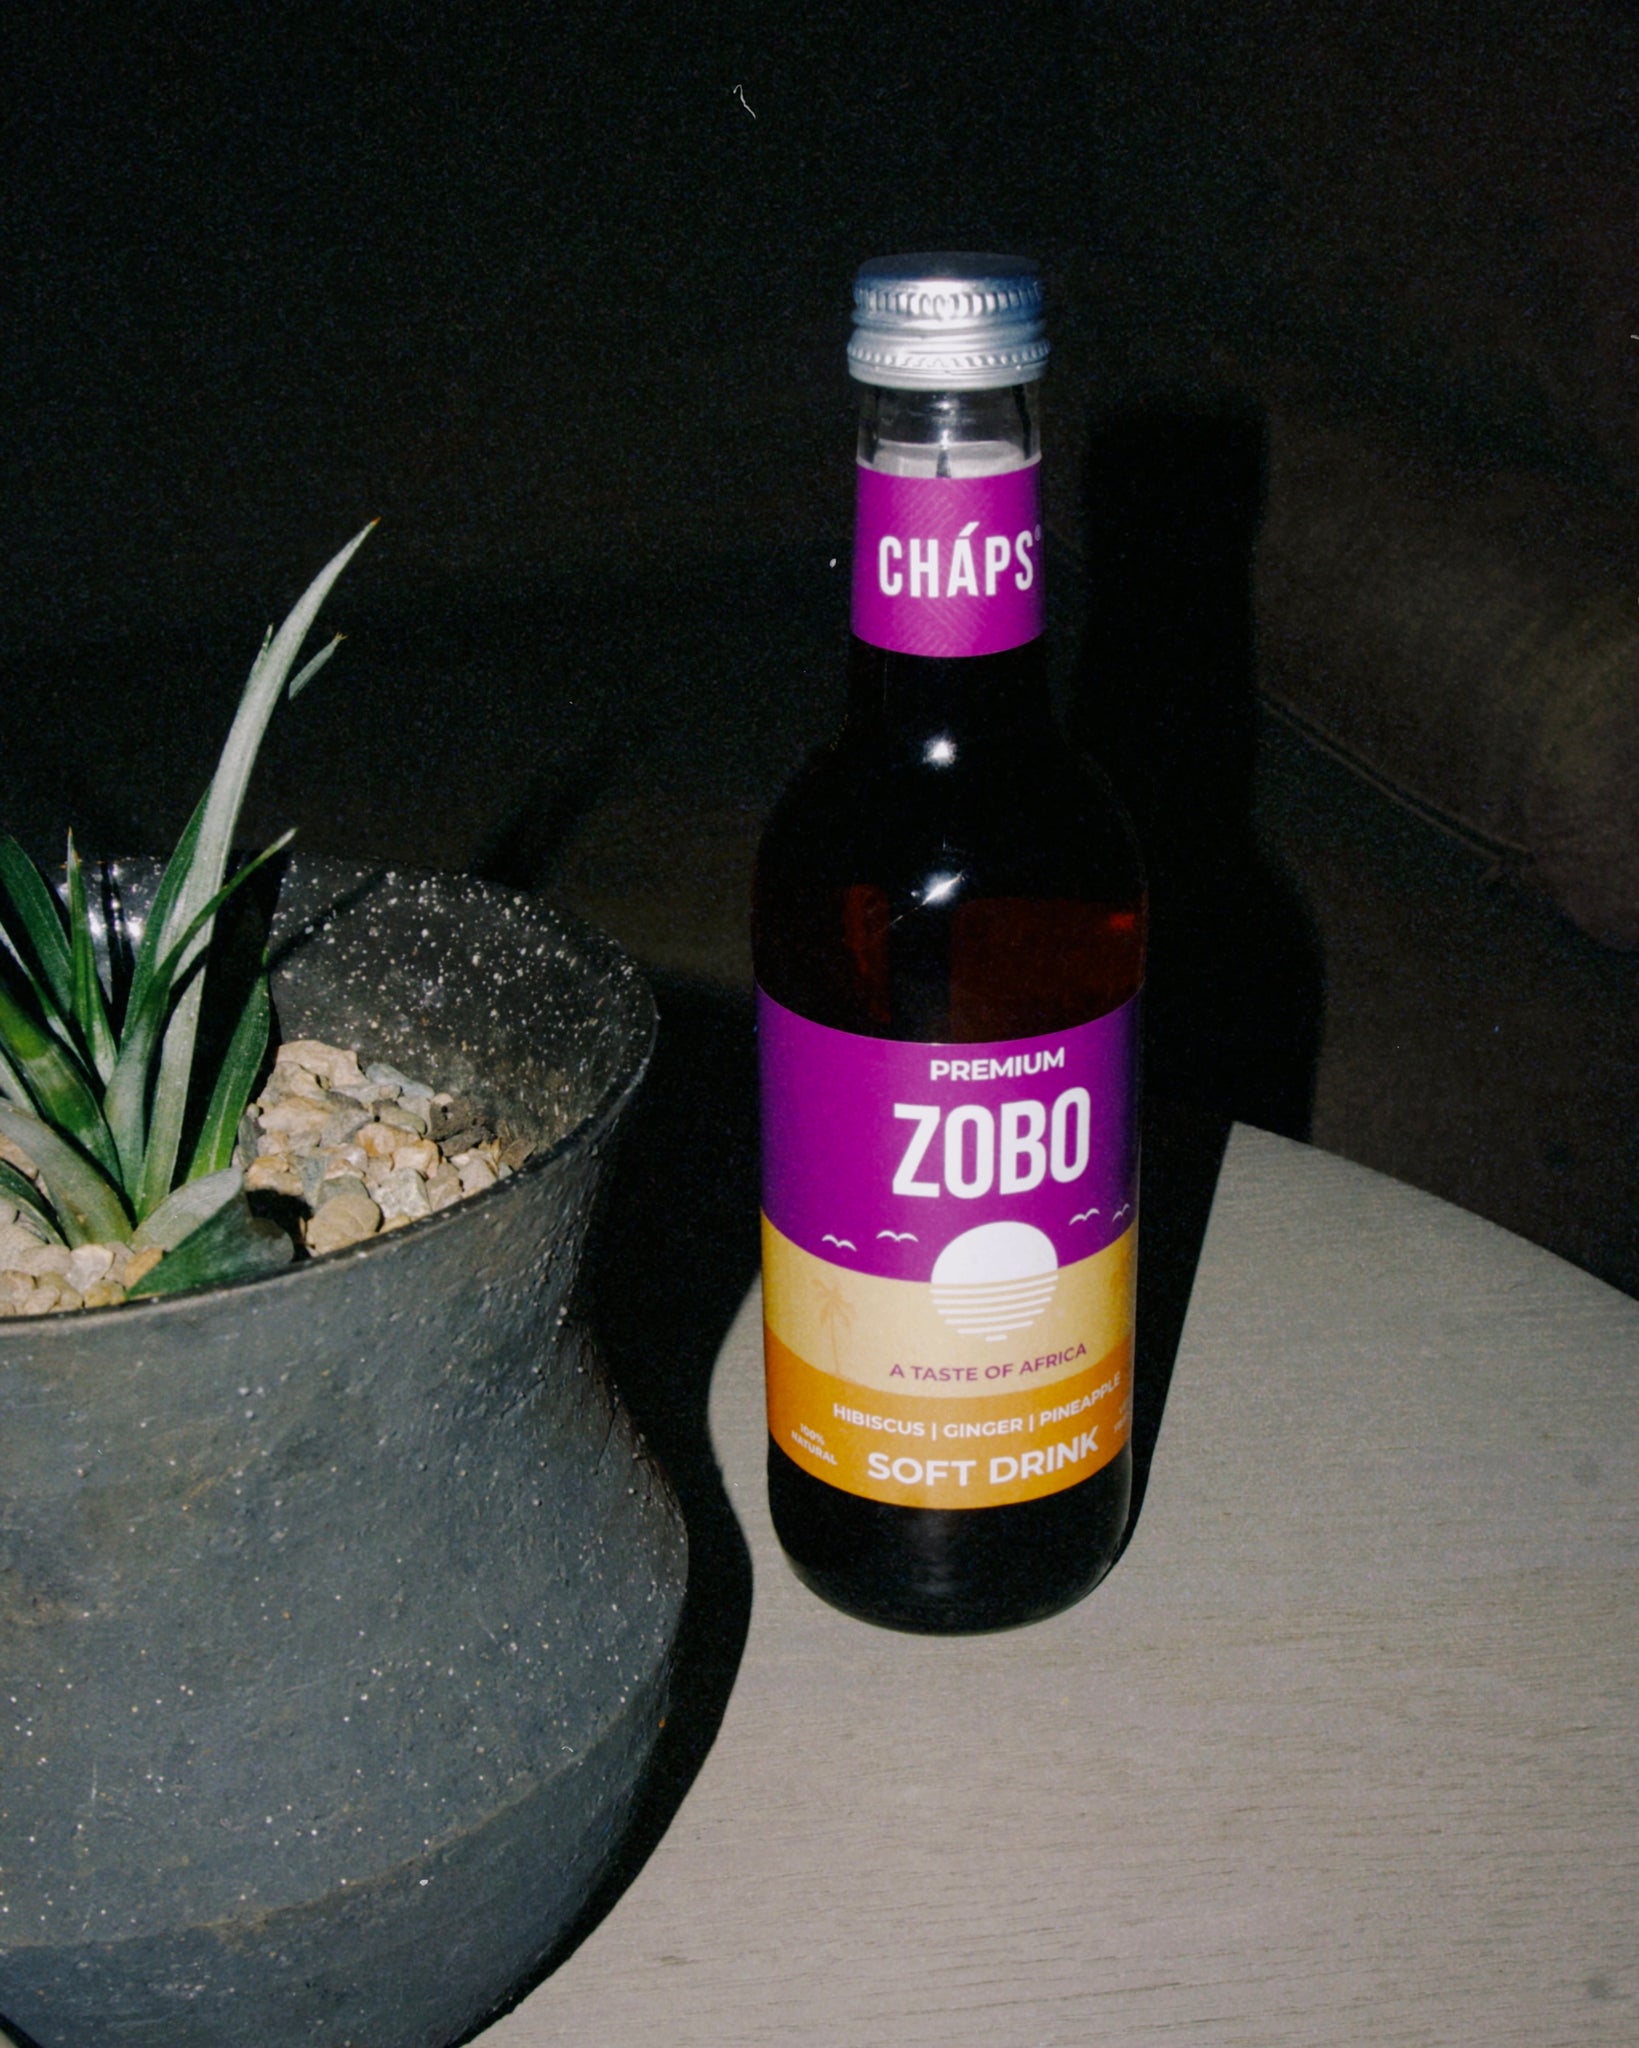 Cháps: Premium Zobo Drink x 12